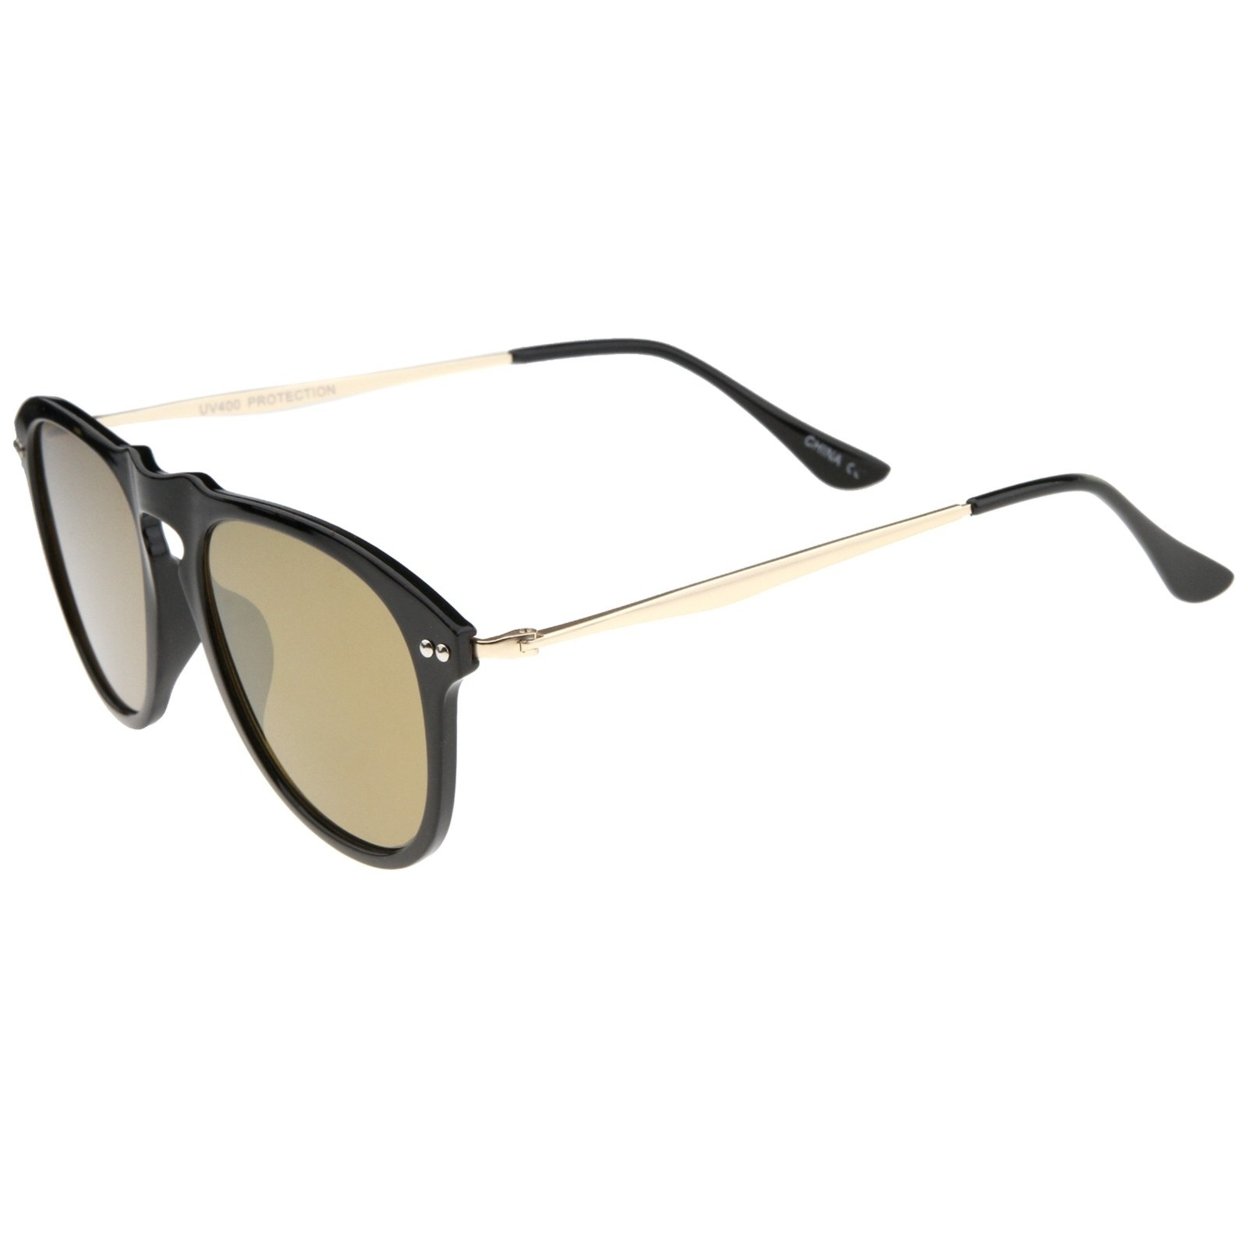 Modern Keyhole Bridge Horn Rimmed Colored Mirror Lens Aviator Sunglasses 53mm - Black-Gold / Blue Mirror